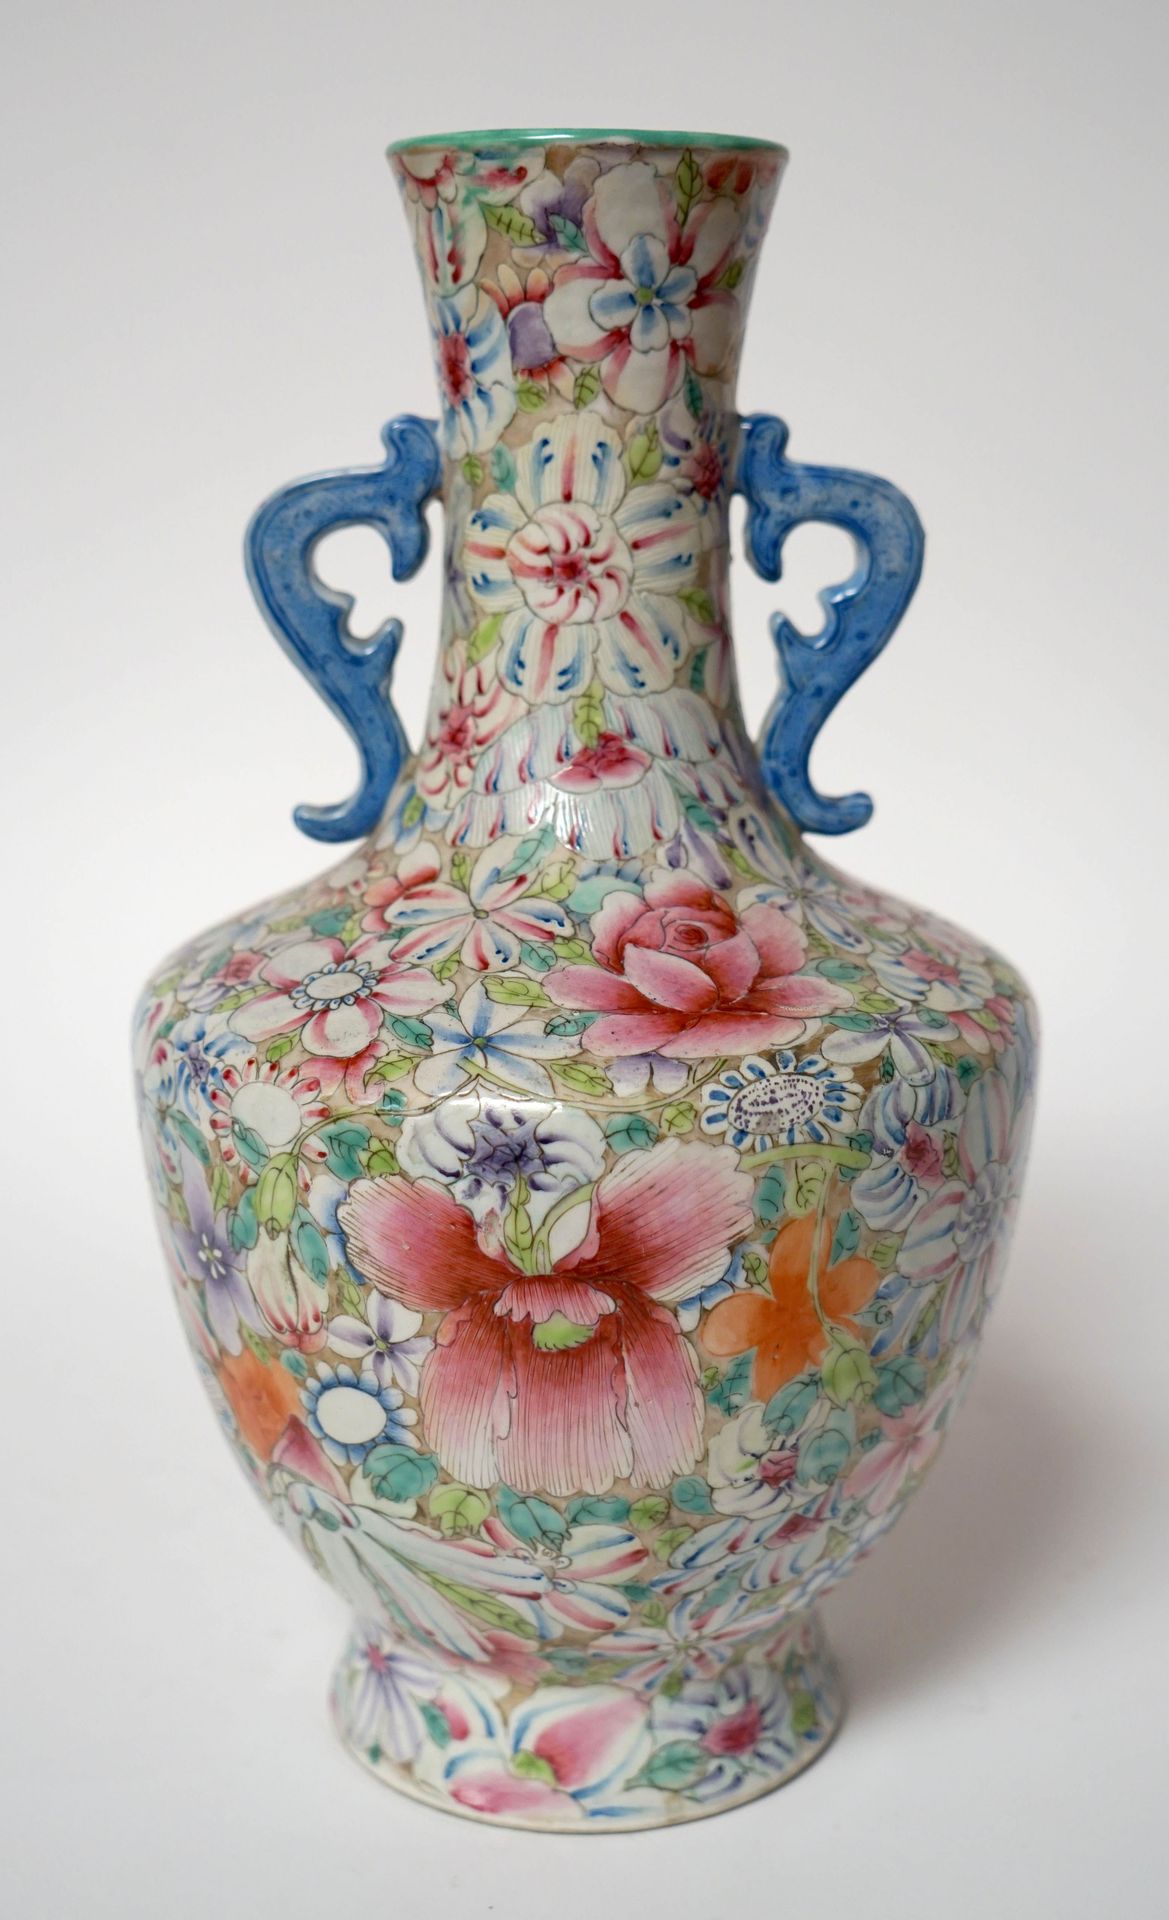 Null 中国。一个多色珐琅彩的瓷质柱形花瓶，有把手和渐变的花朵设计。33厘米